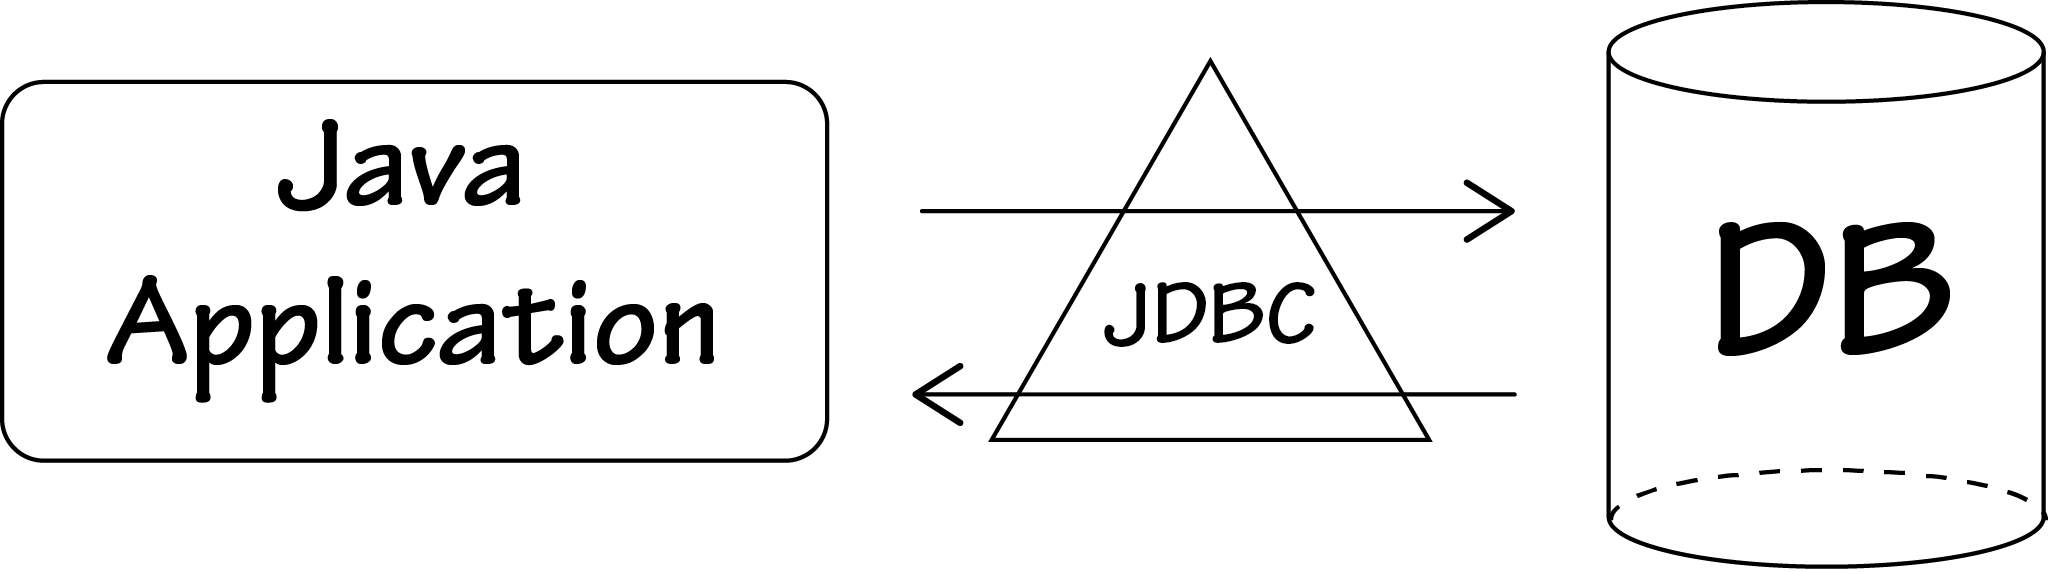 jdbc's position